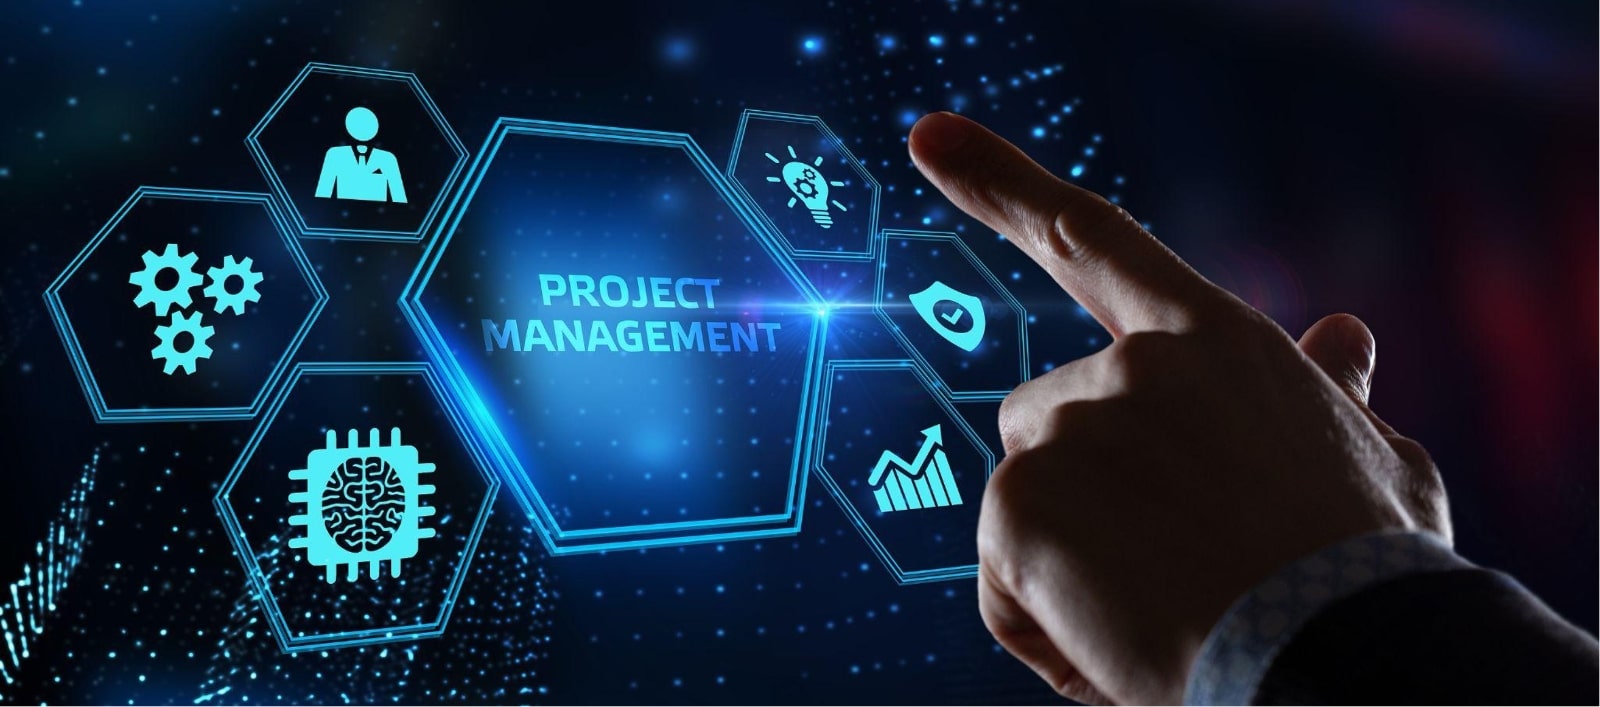 Project Management - IMM Blog Article Image